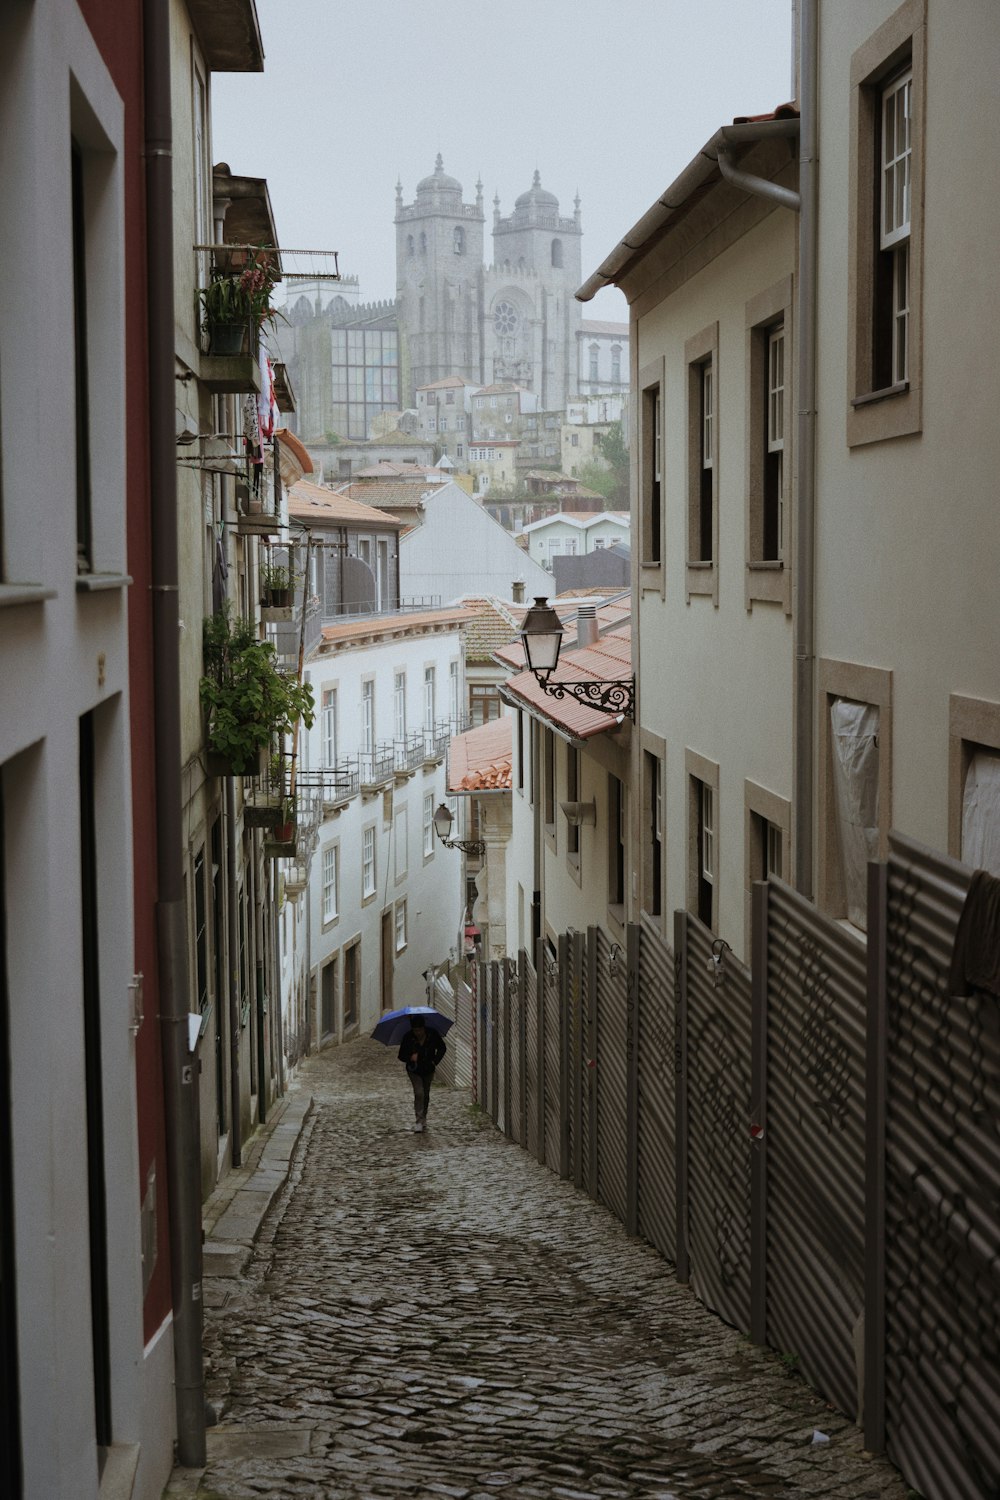 a person walking down a cobblestone street holding an umbrella